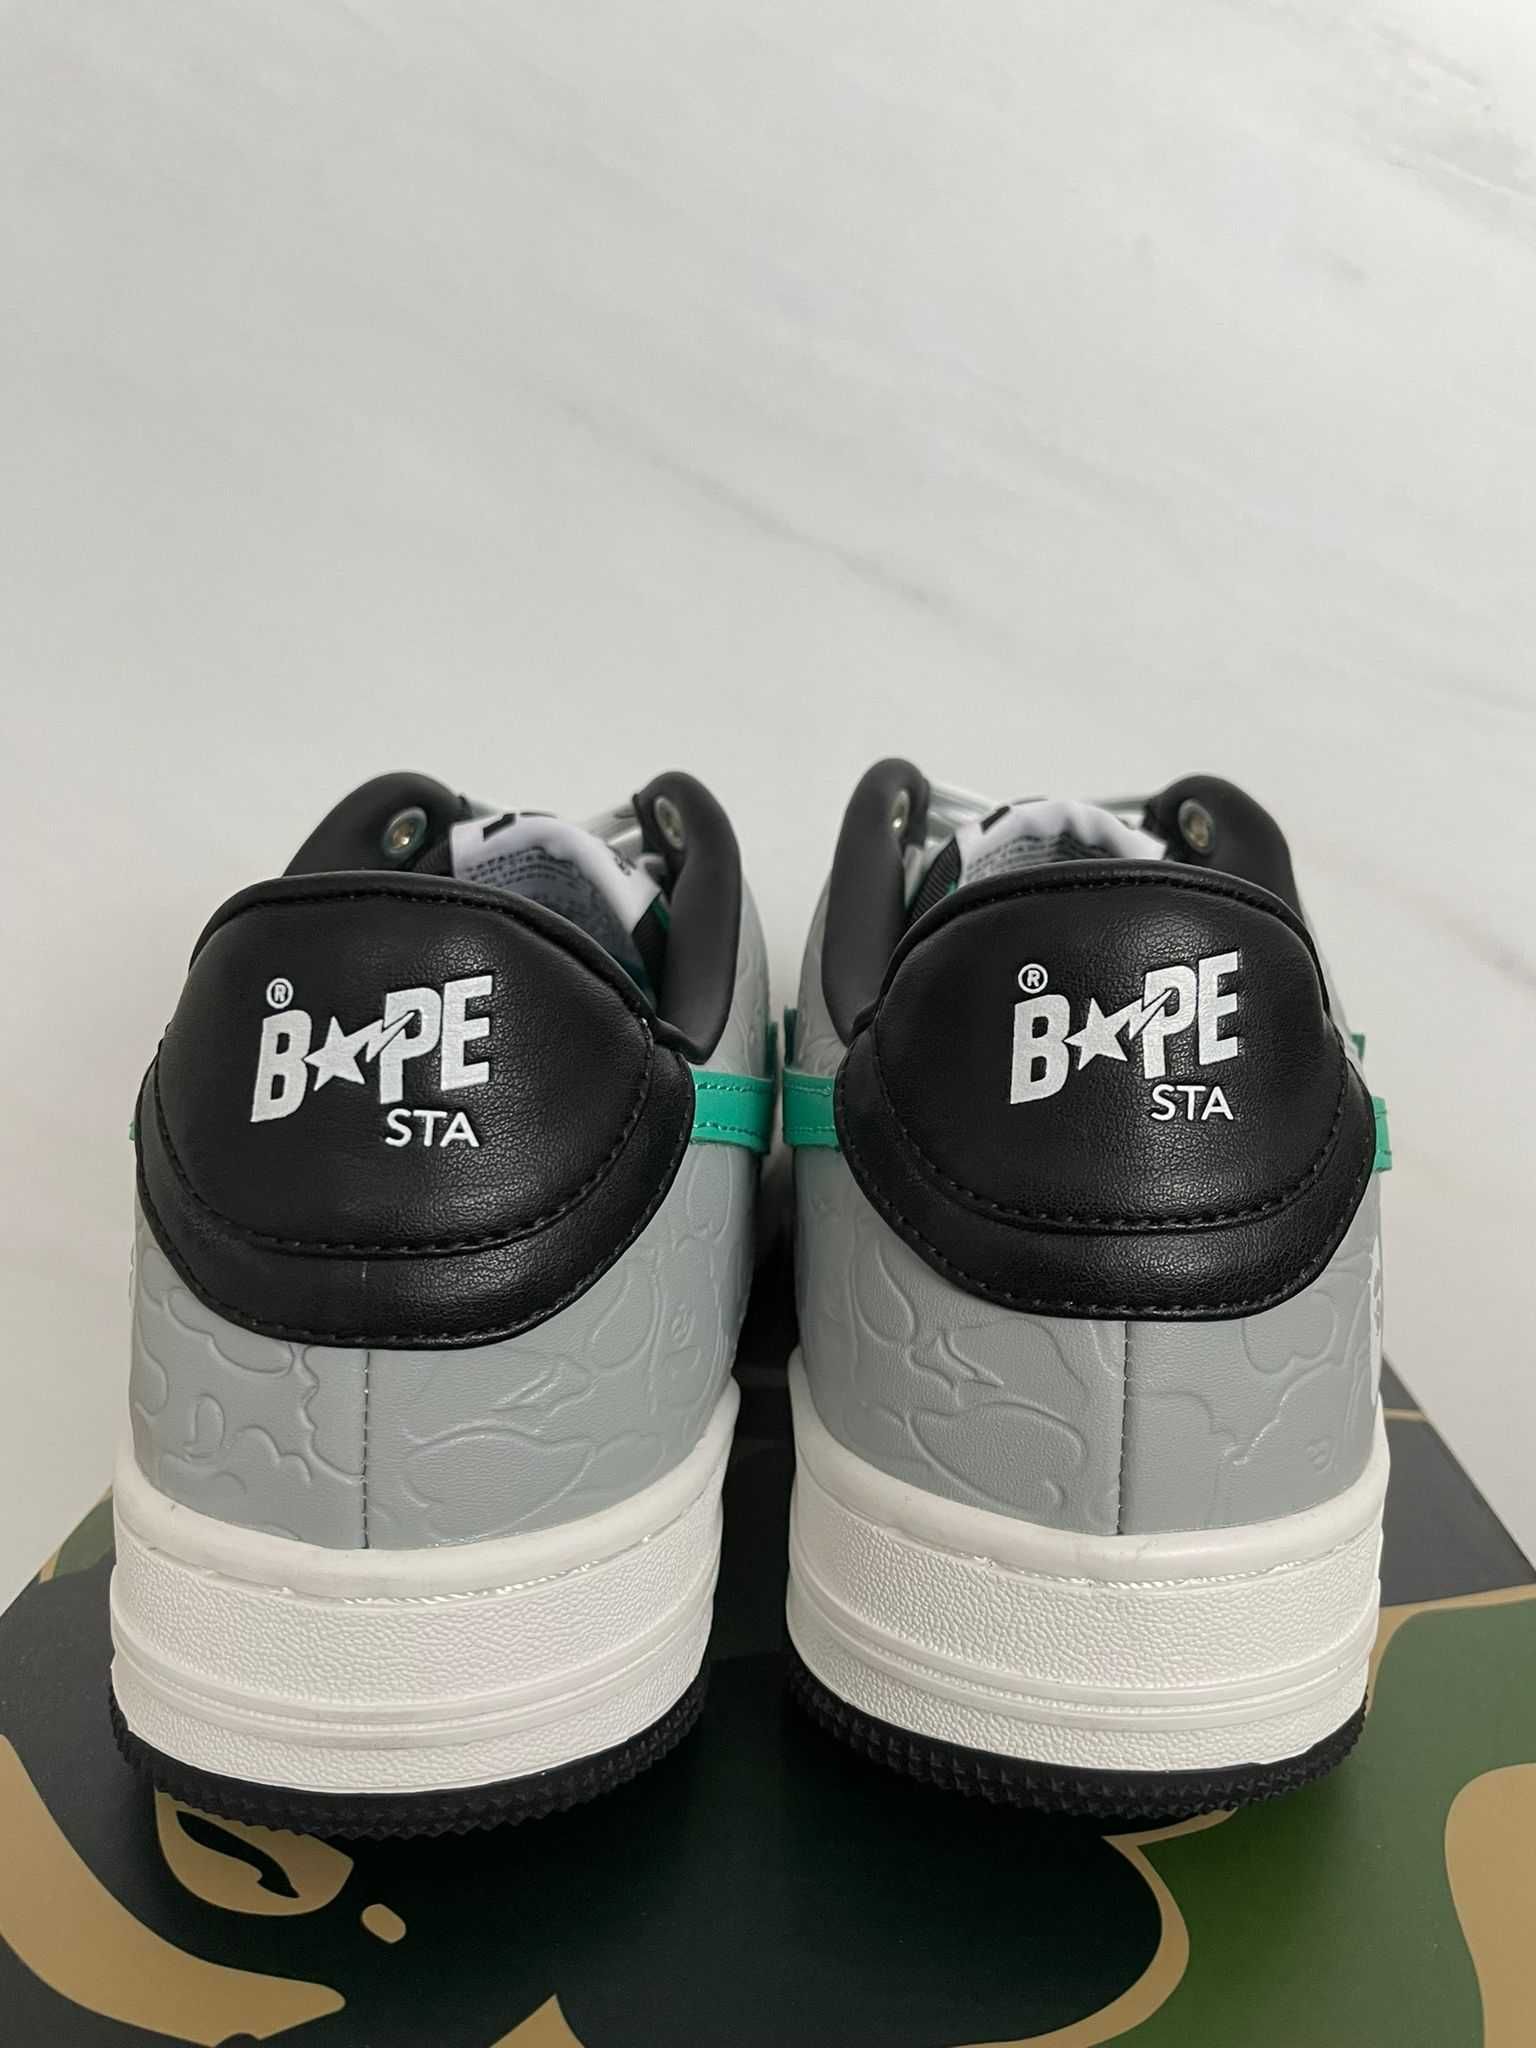 Adidas Bape bapesta grey/green/black